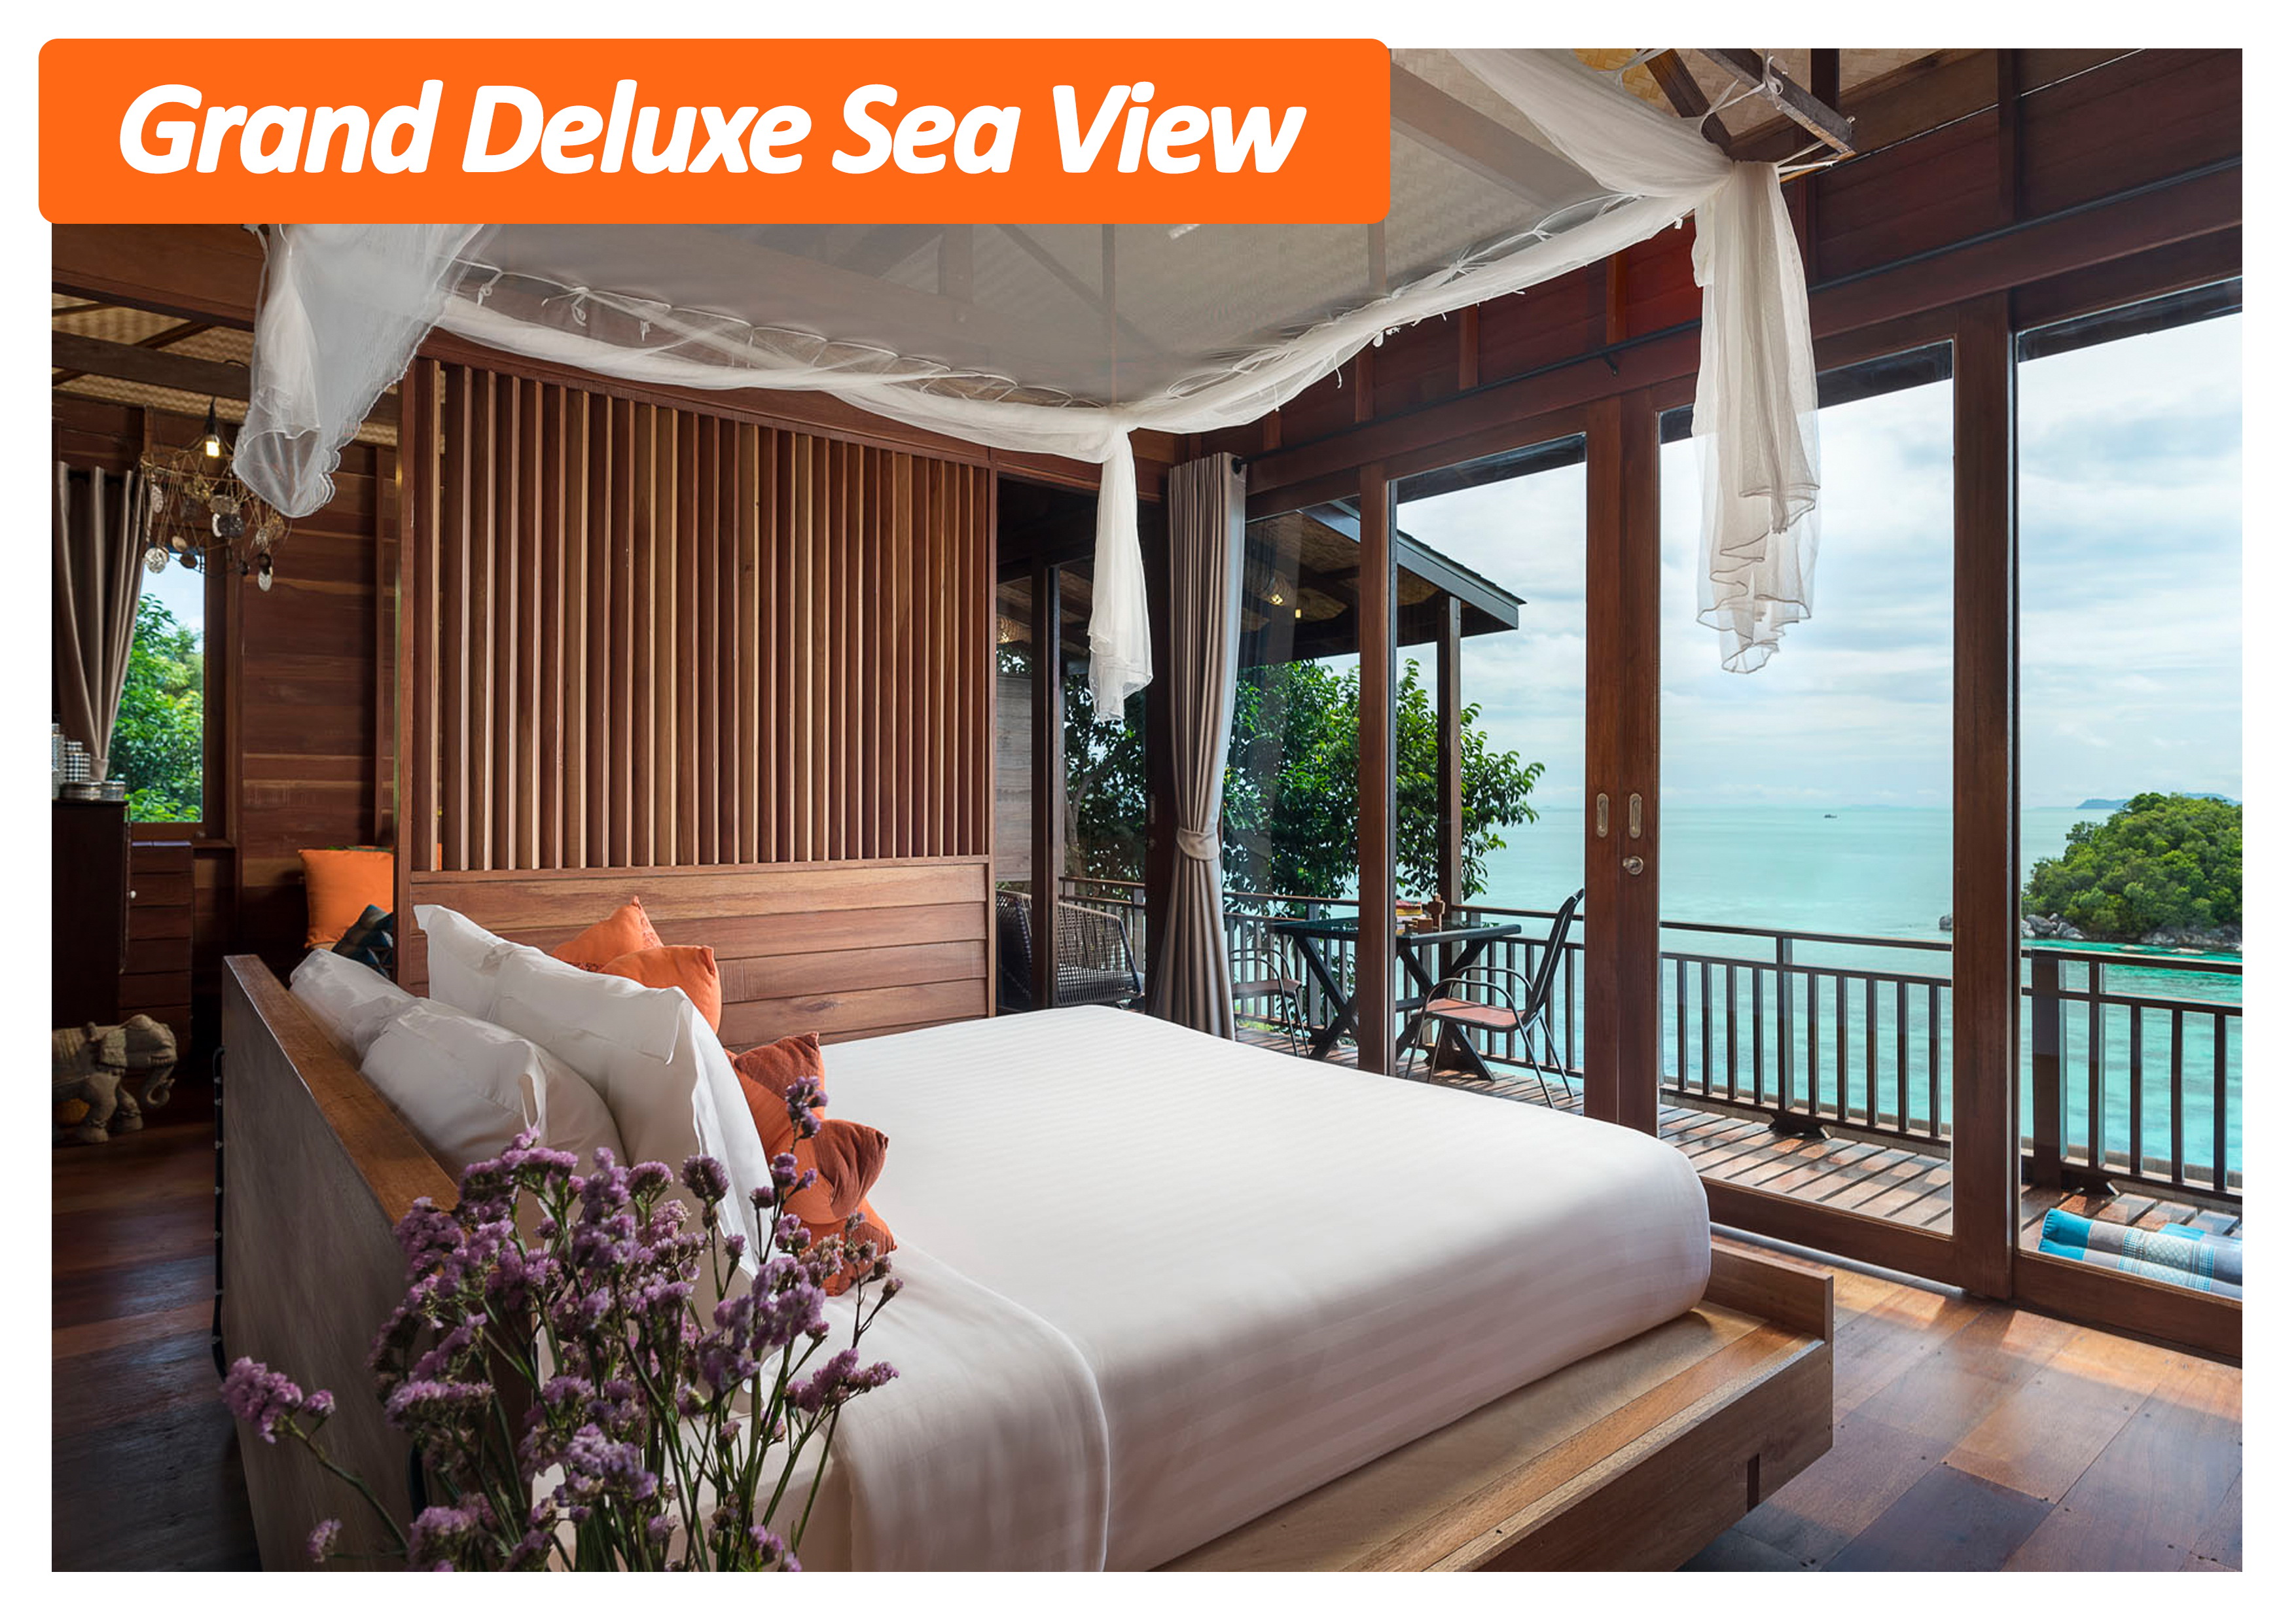 Grand Deluxe Sea View | serendipity resort